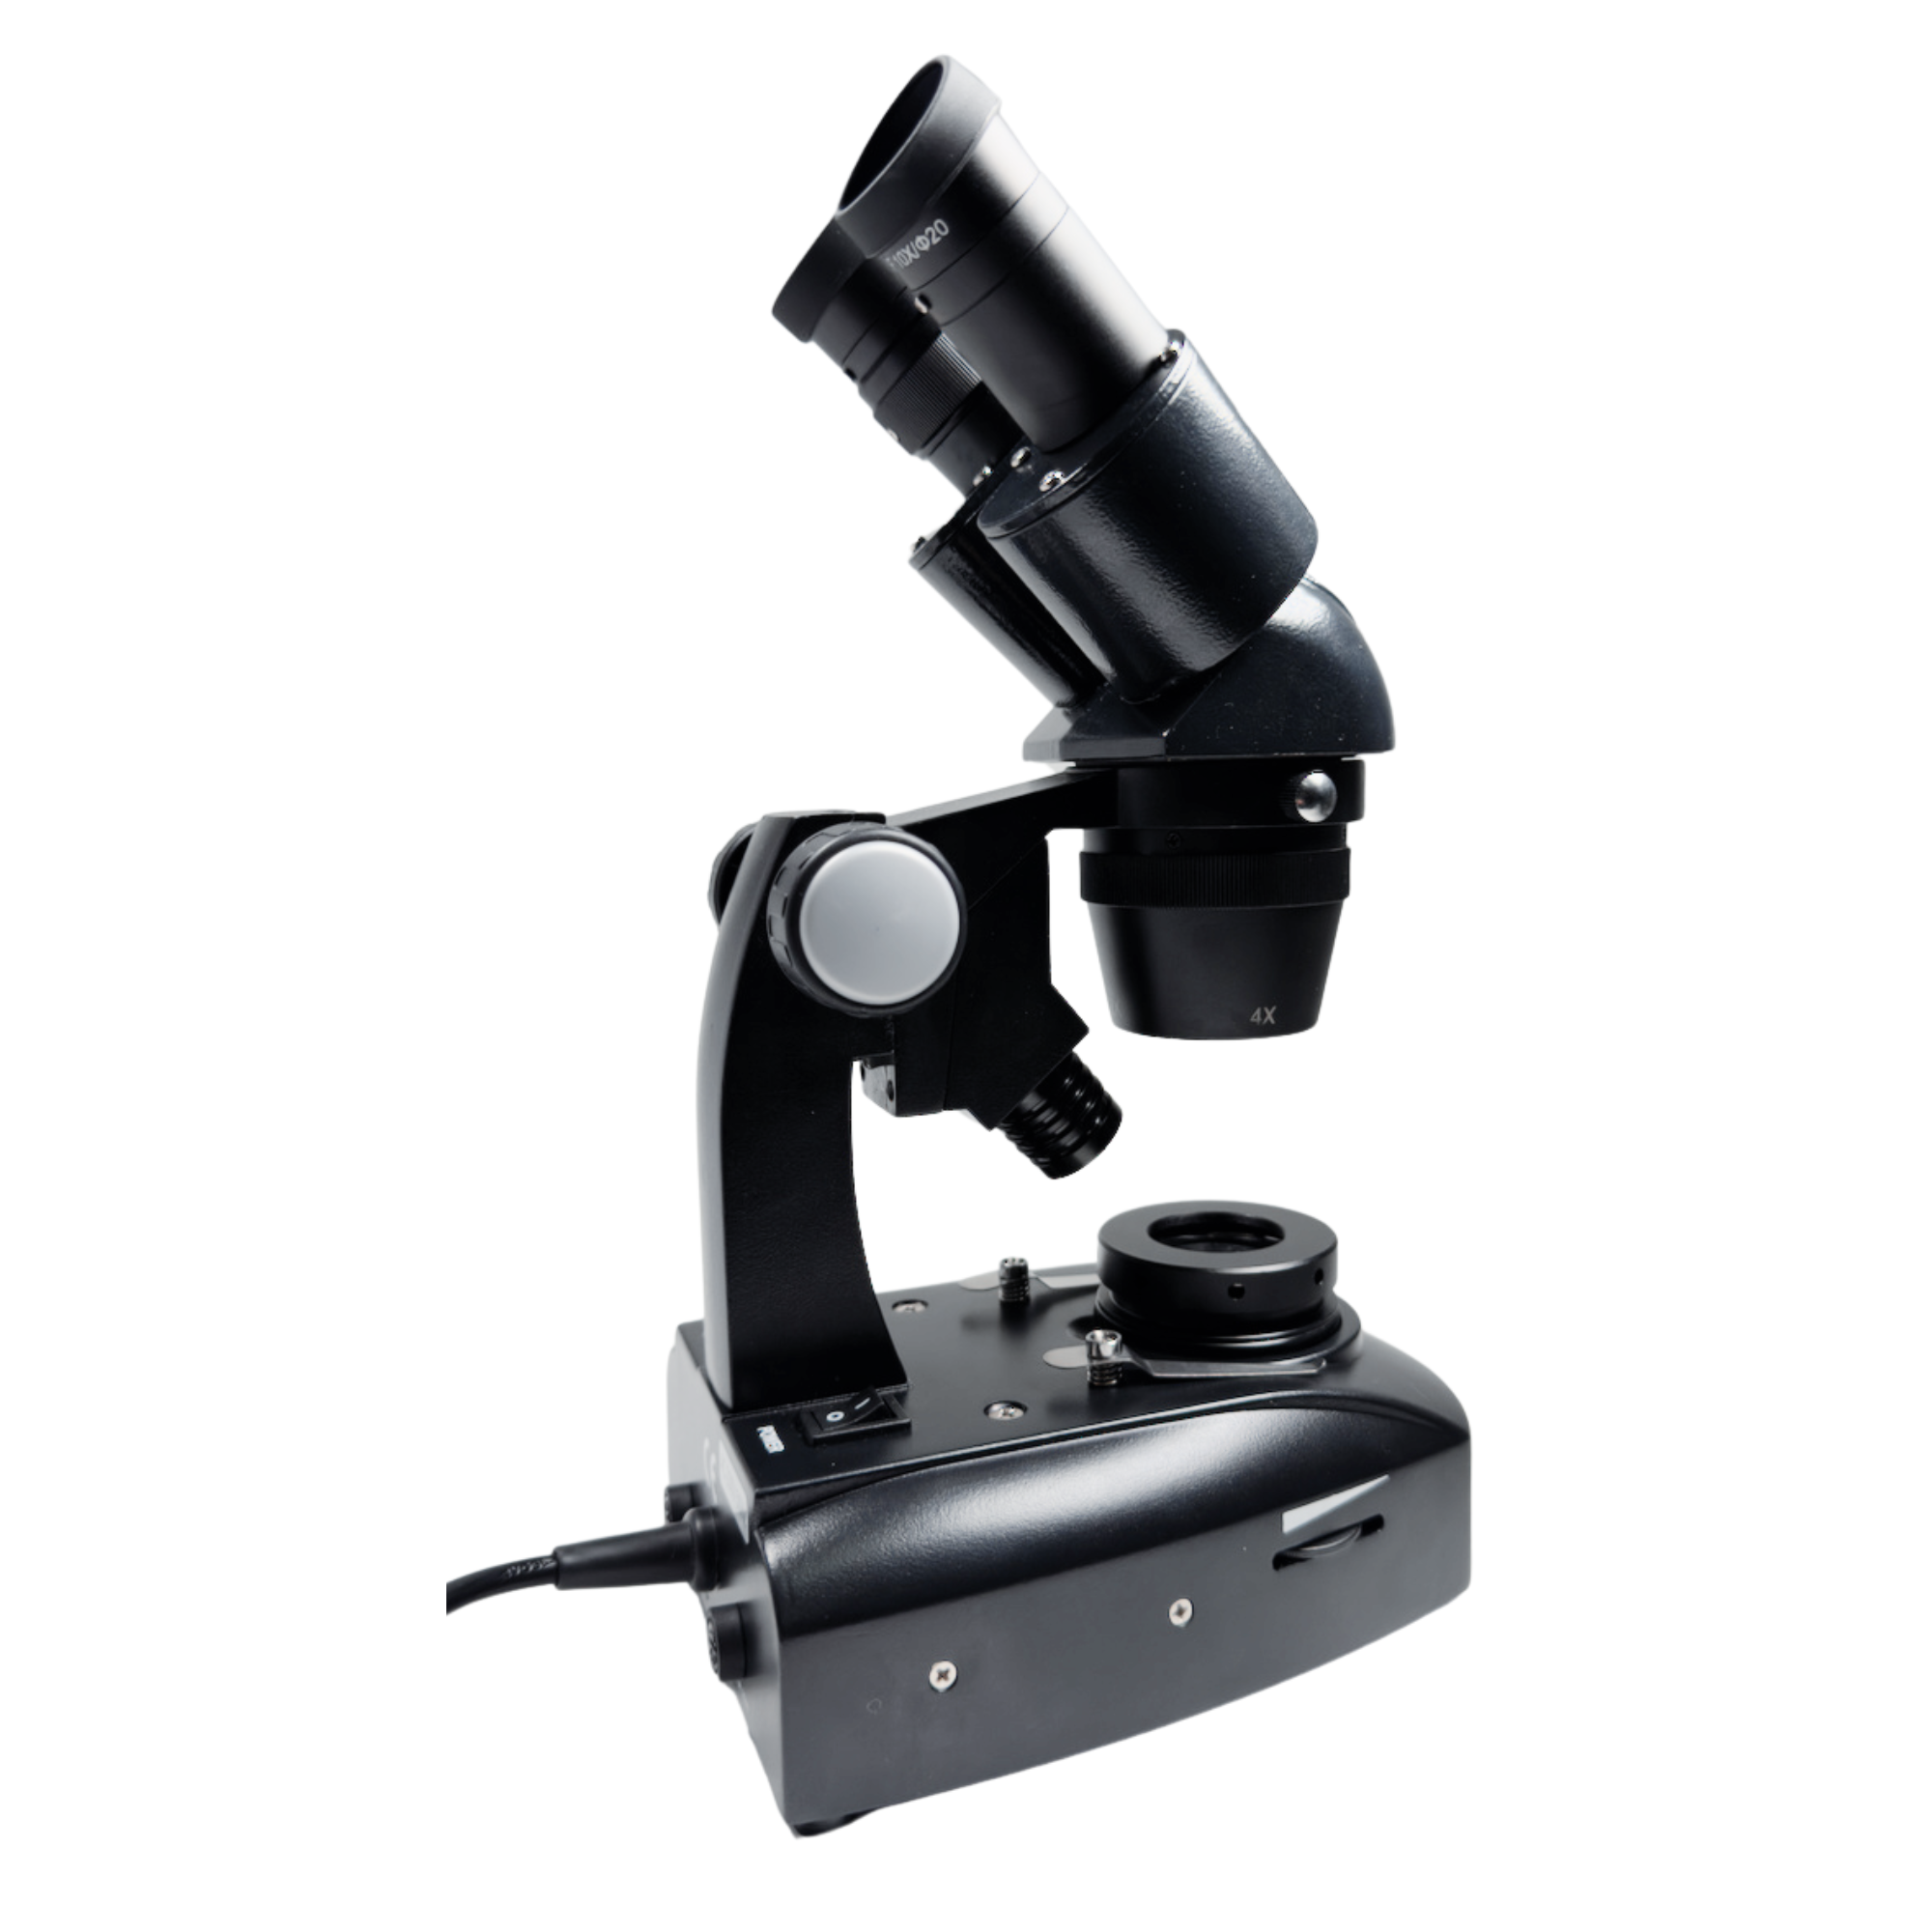 Basic Gemological microscope